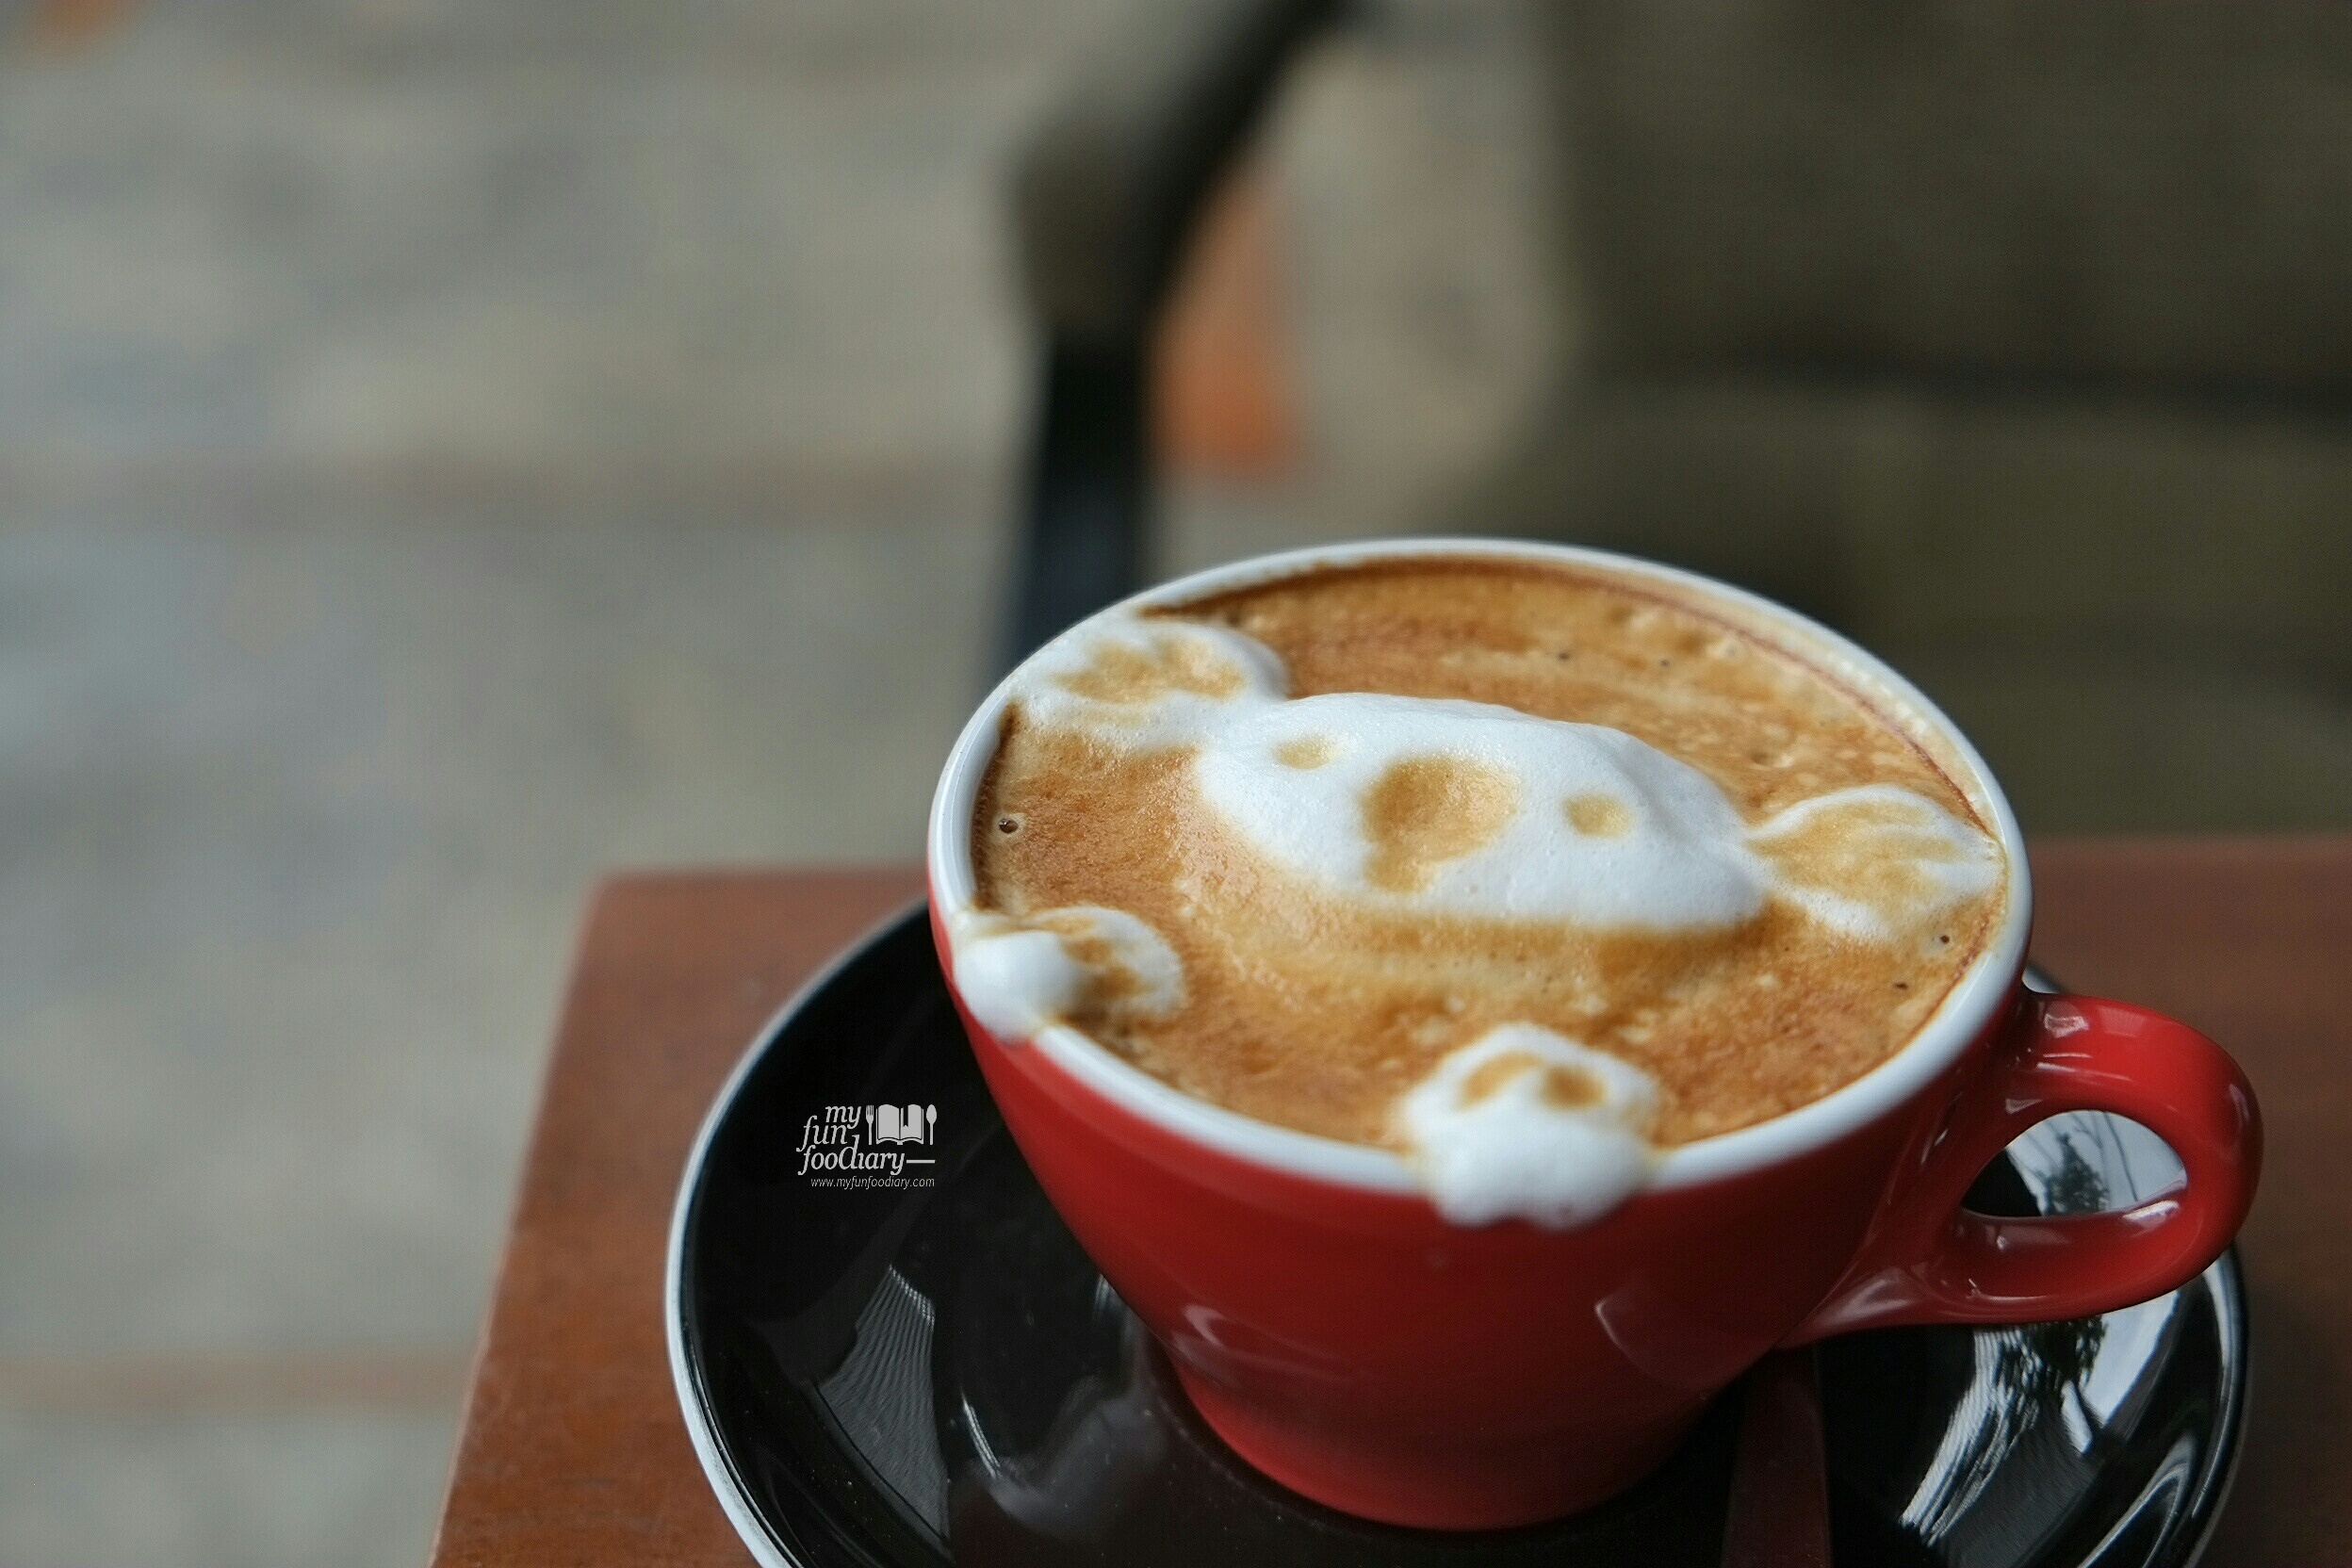 Koala in 3D Latte Art at Noahs Barn Dayang Sumbi by Myfunfoodiary 02